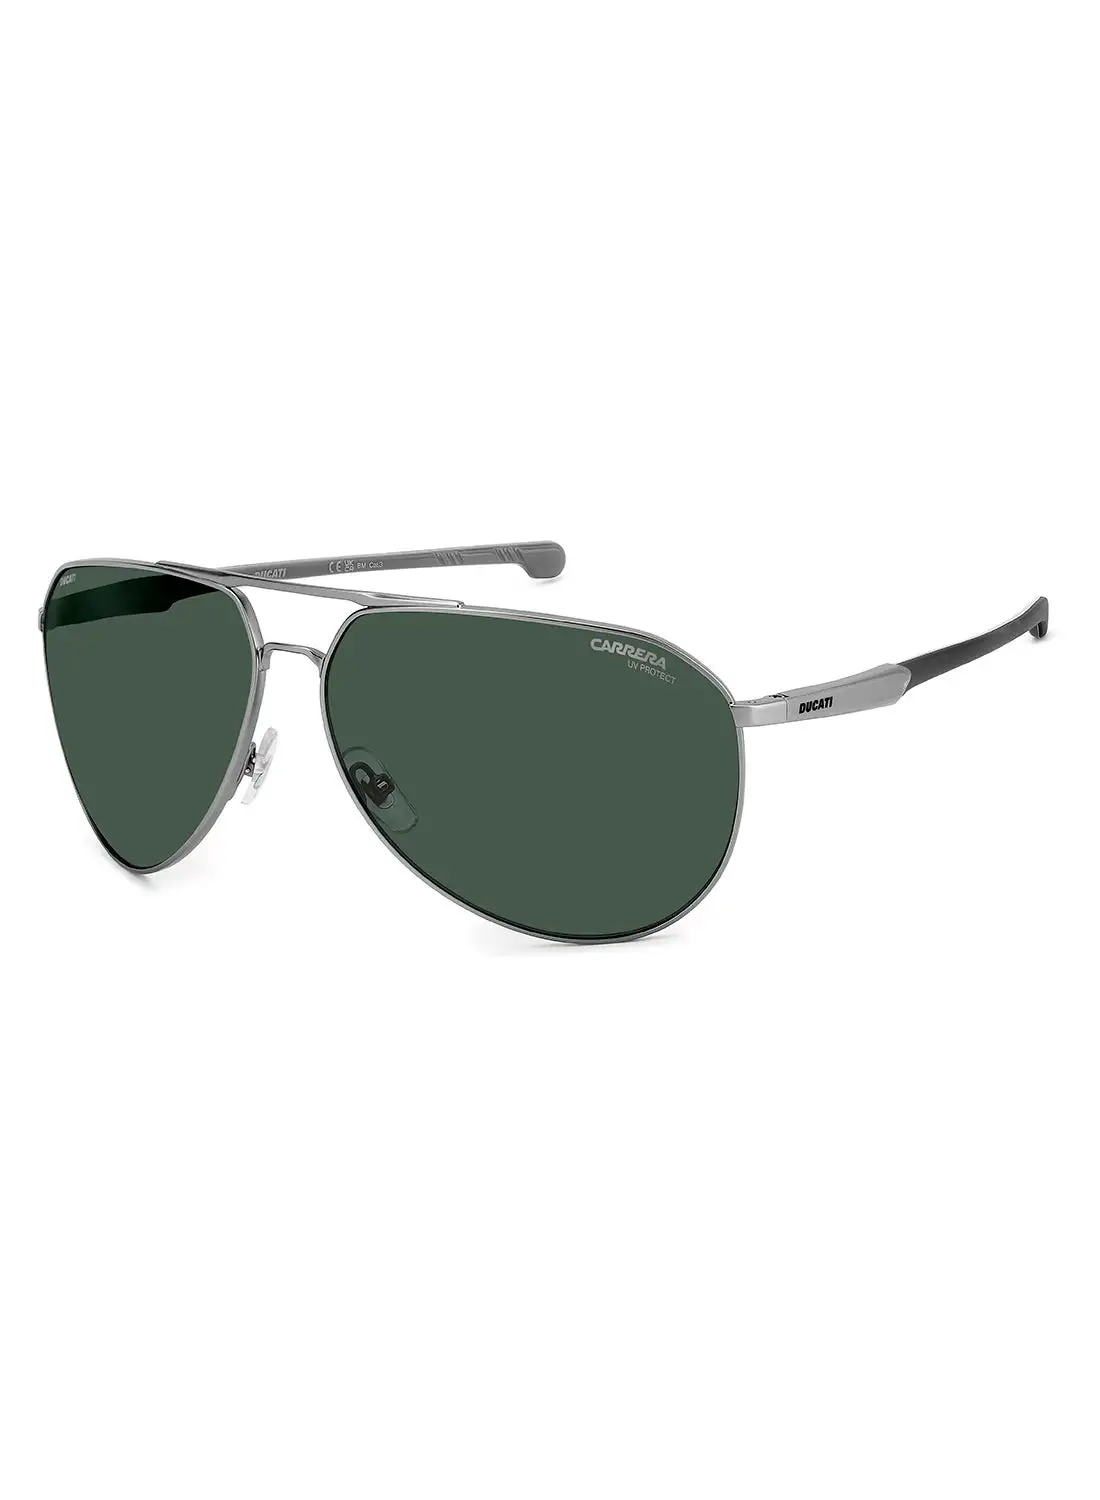 Carrera Men's UV Protection Pilot Sunglasses - Carduc 030/S Grey Millimeter - Lens Size: 67 Mm